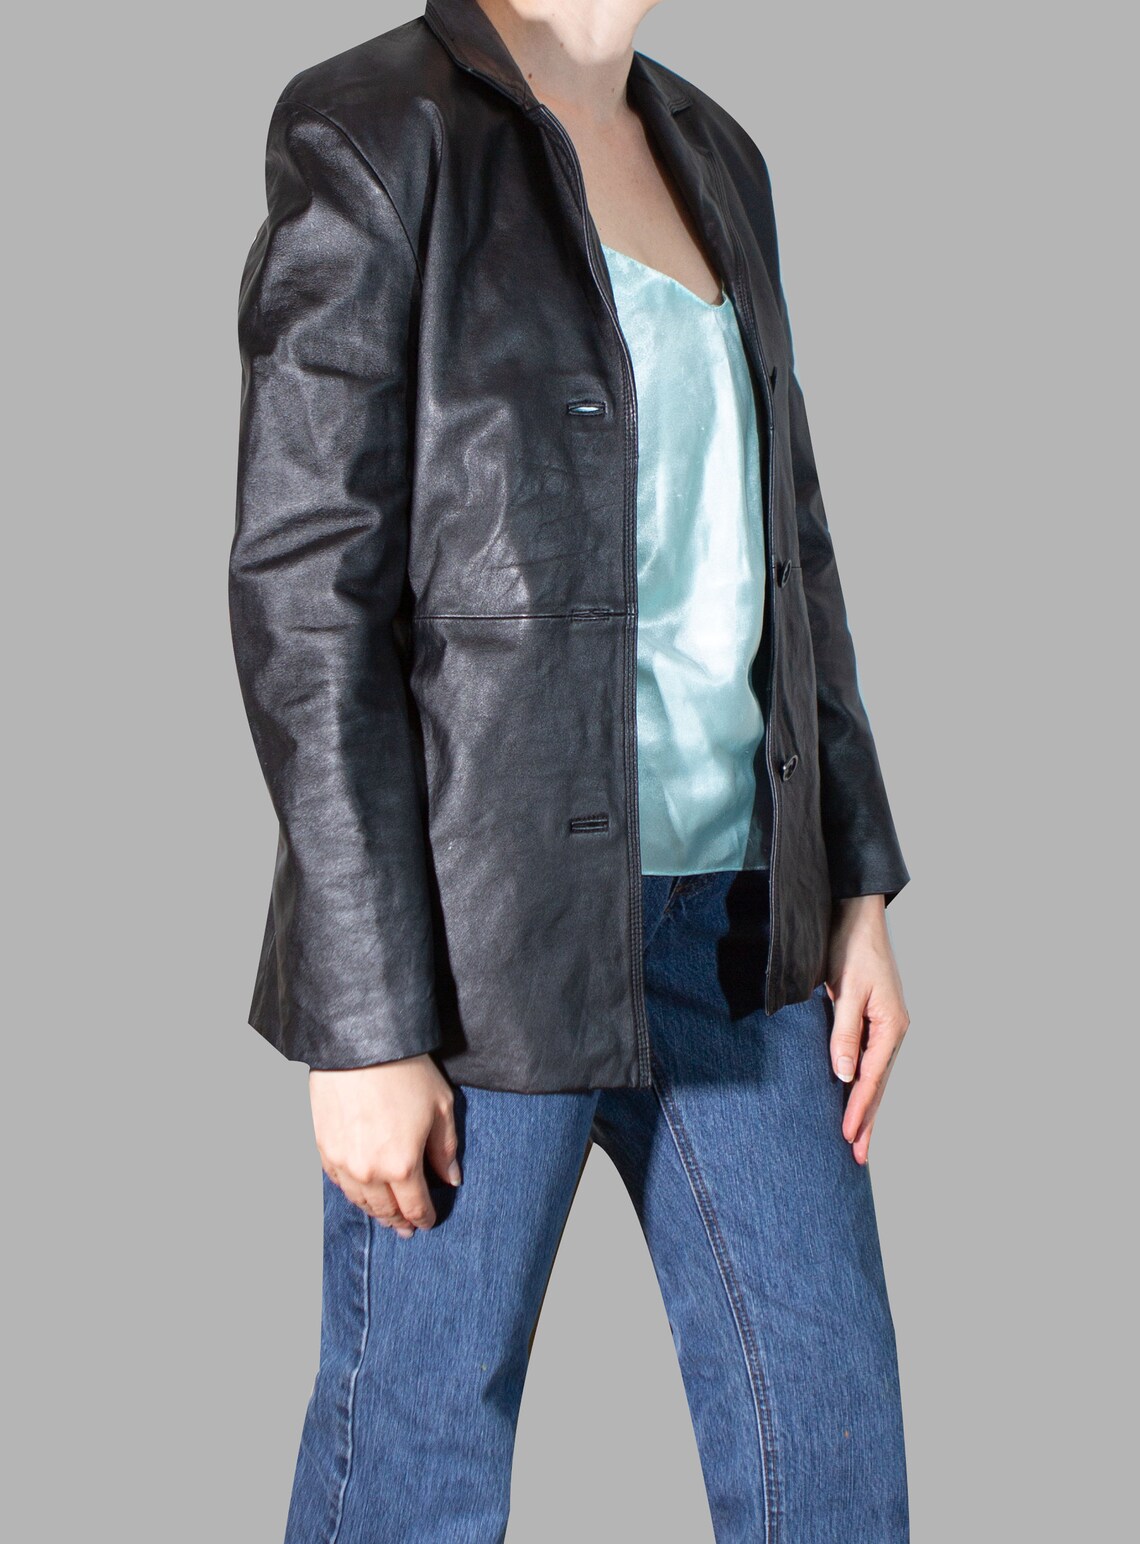 Longline Leather Jacket Vintage Black Trench black blazer | Etsy